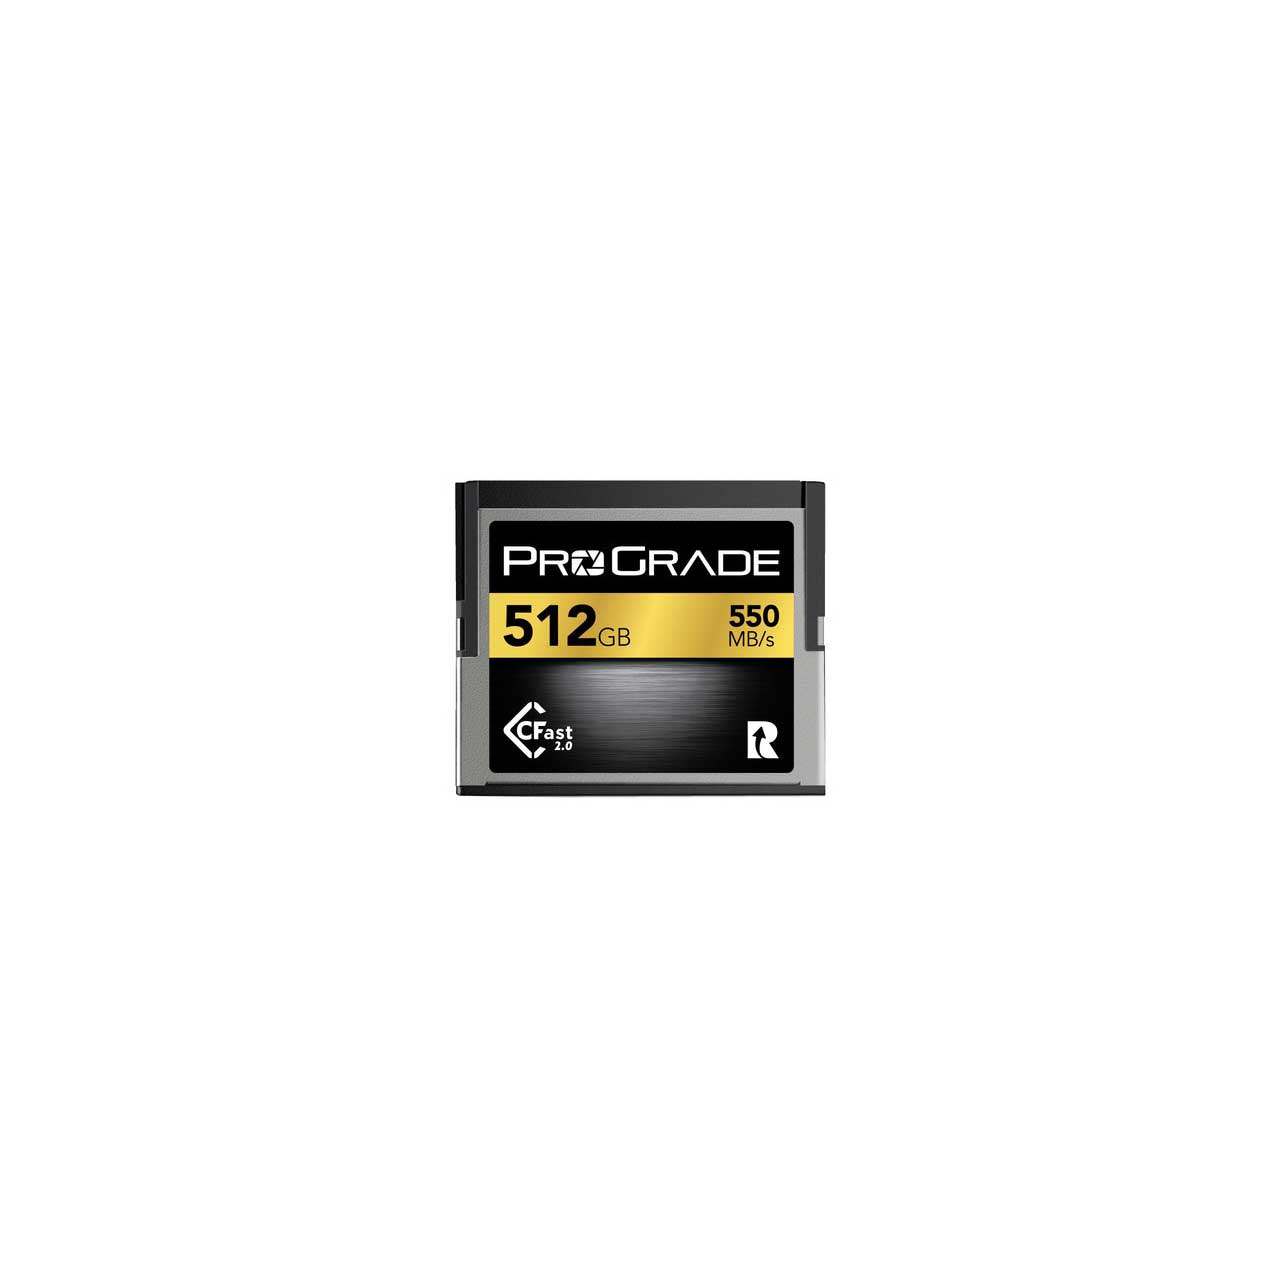 ProGrade Digital PGCFA512GAJNA CFast 2.0 Memory Card with up to 450 MB/s Write Speed - 512 GB PGD-PGCFA512GAJN